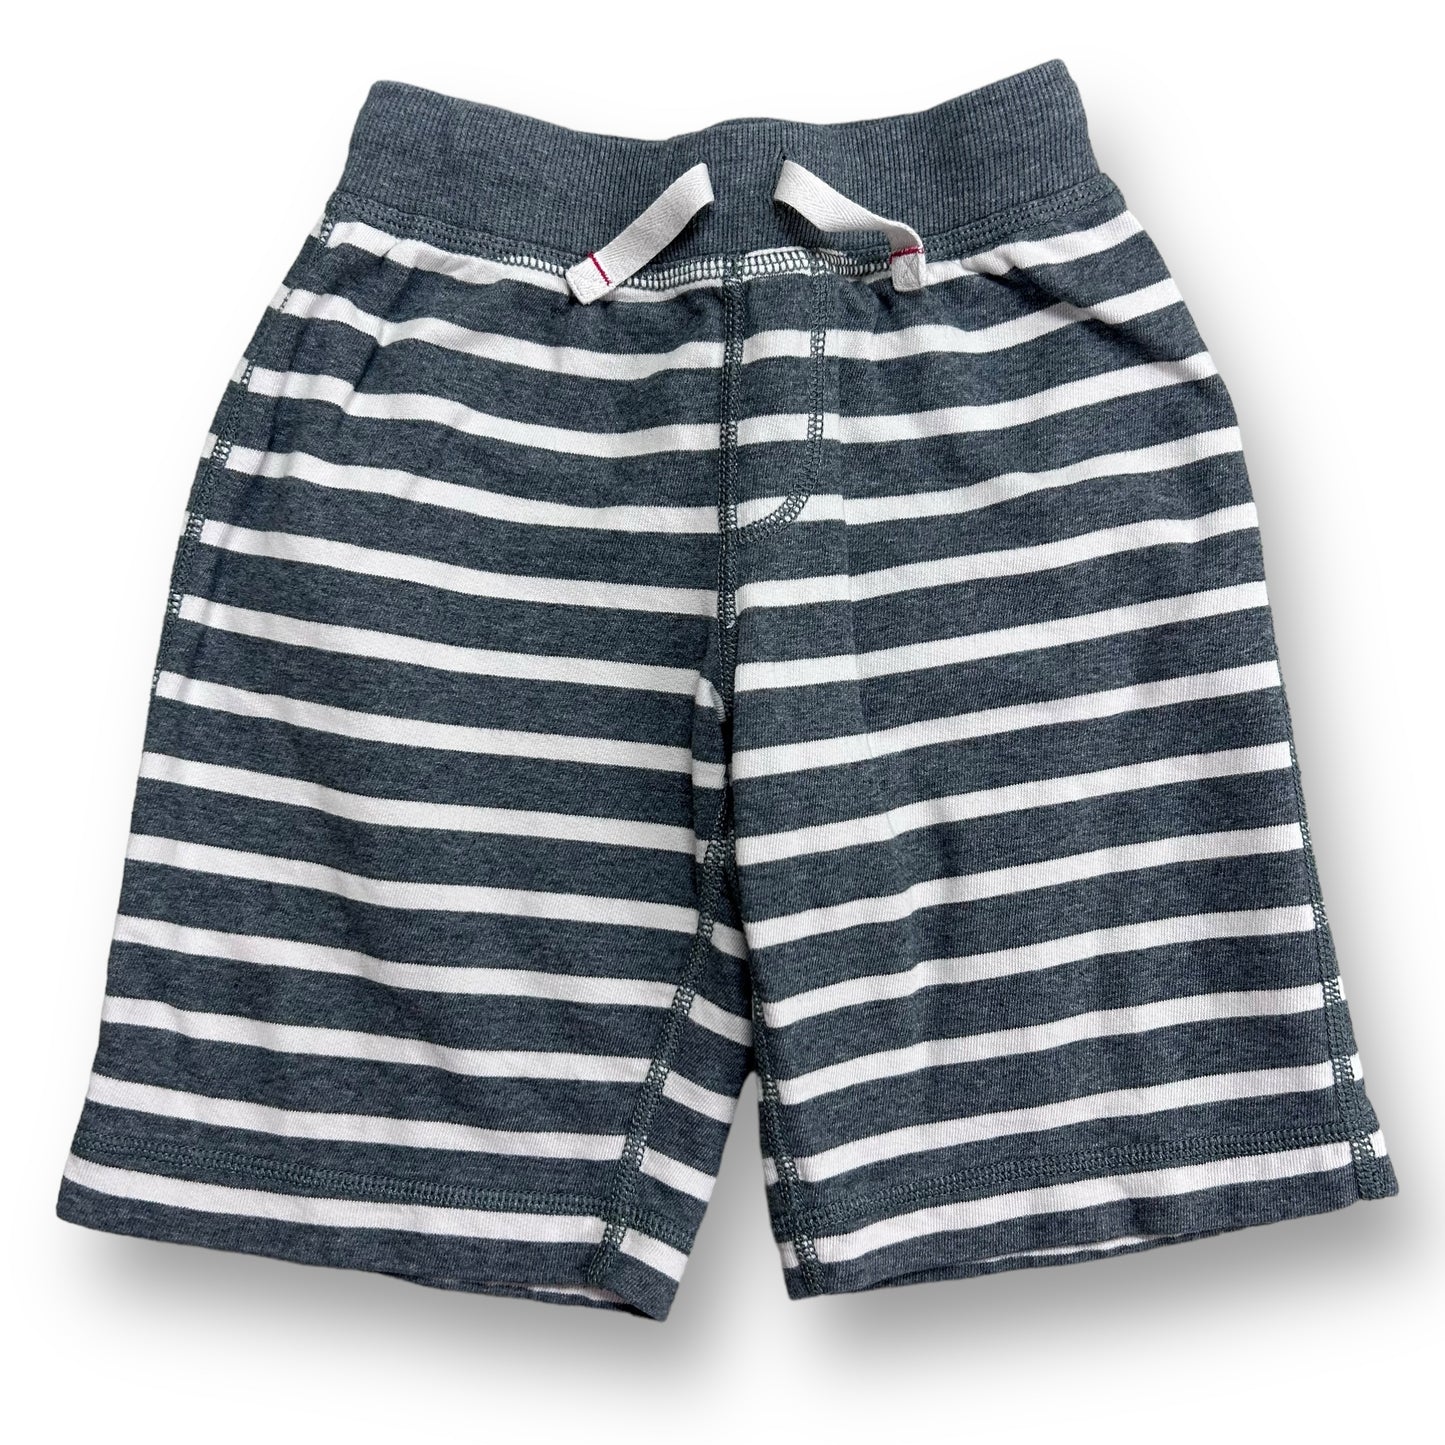 Boys Hanna Andersson Size 5/6 120 Gray Striped Knit Drawstring Shorts